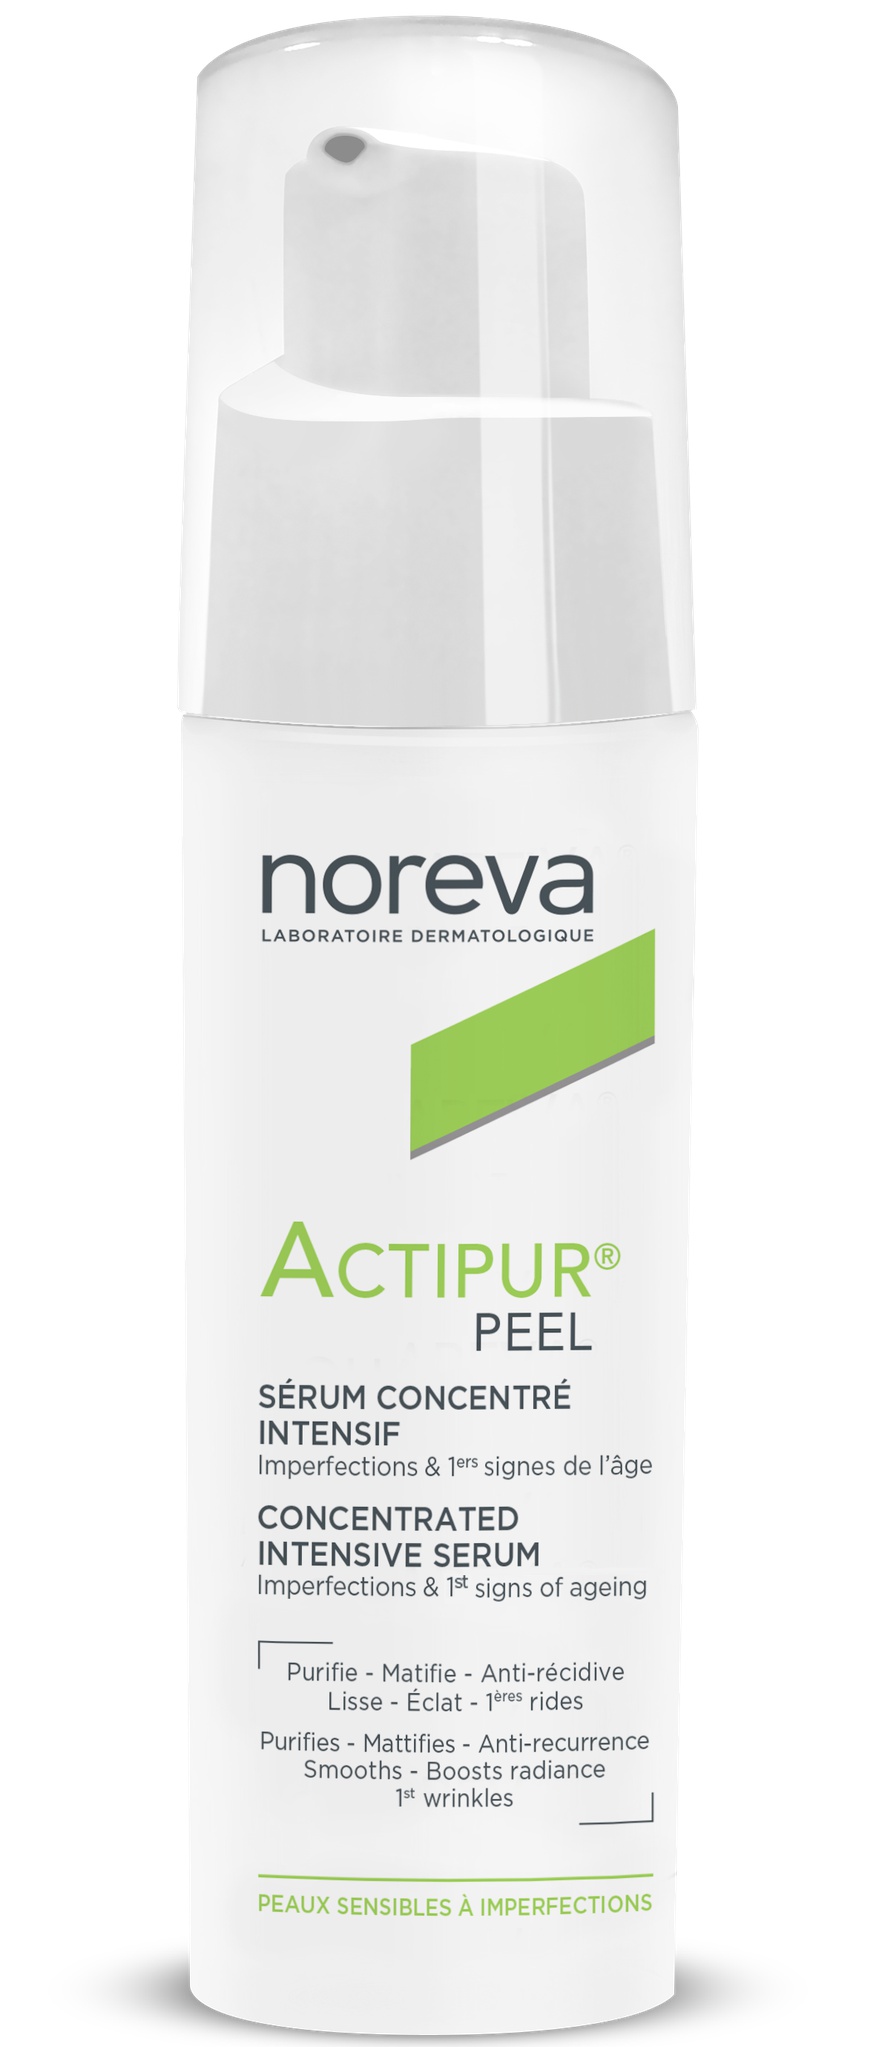 Noreva Actipur Peel Concentrated Intensive Serum